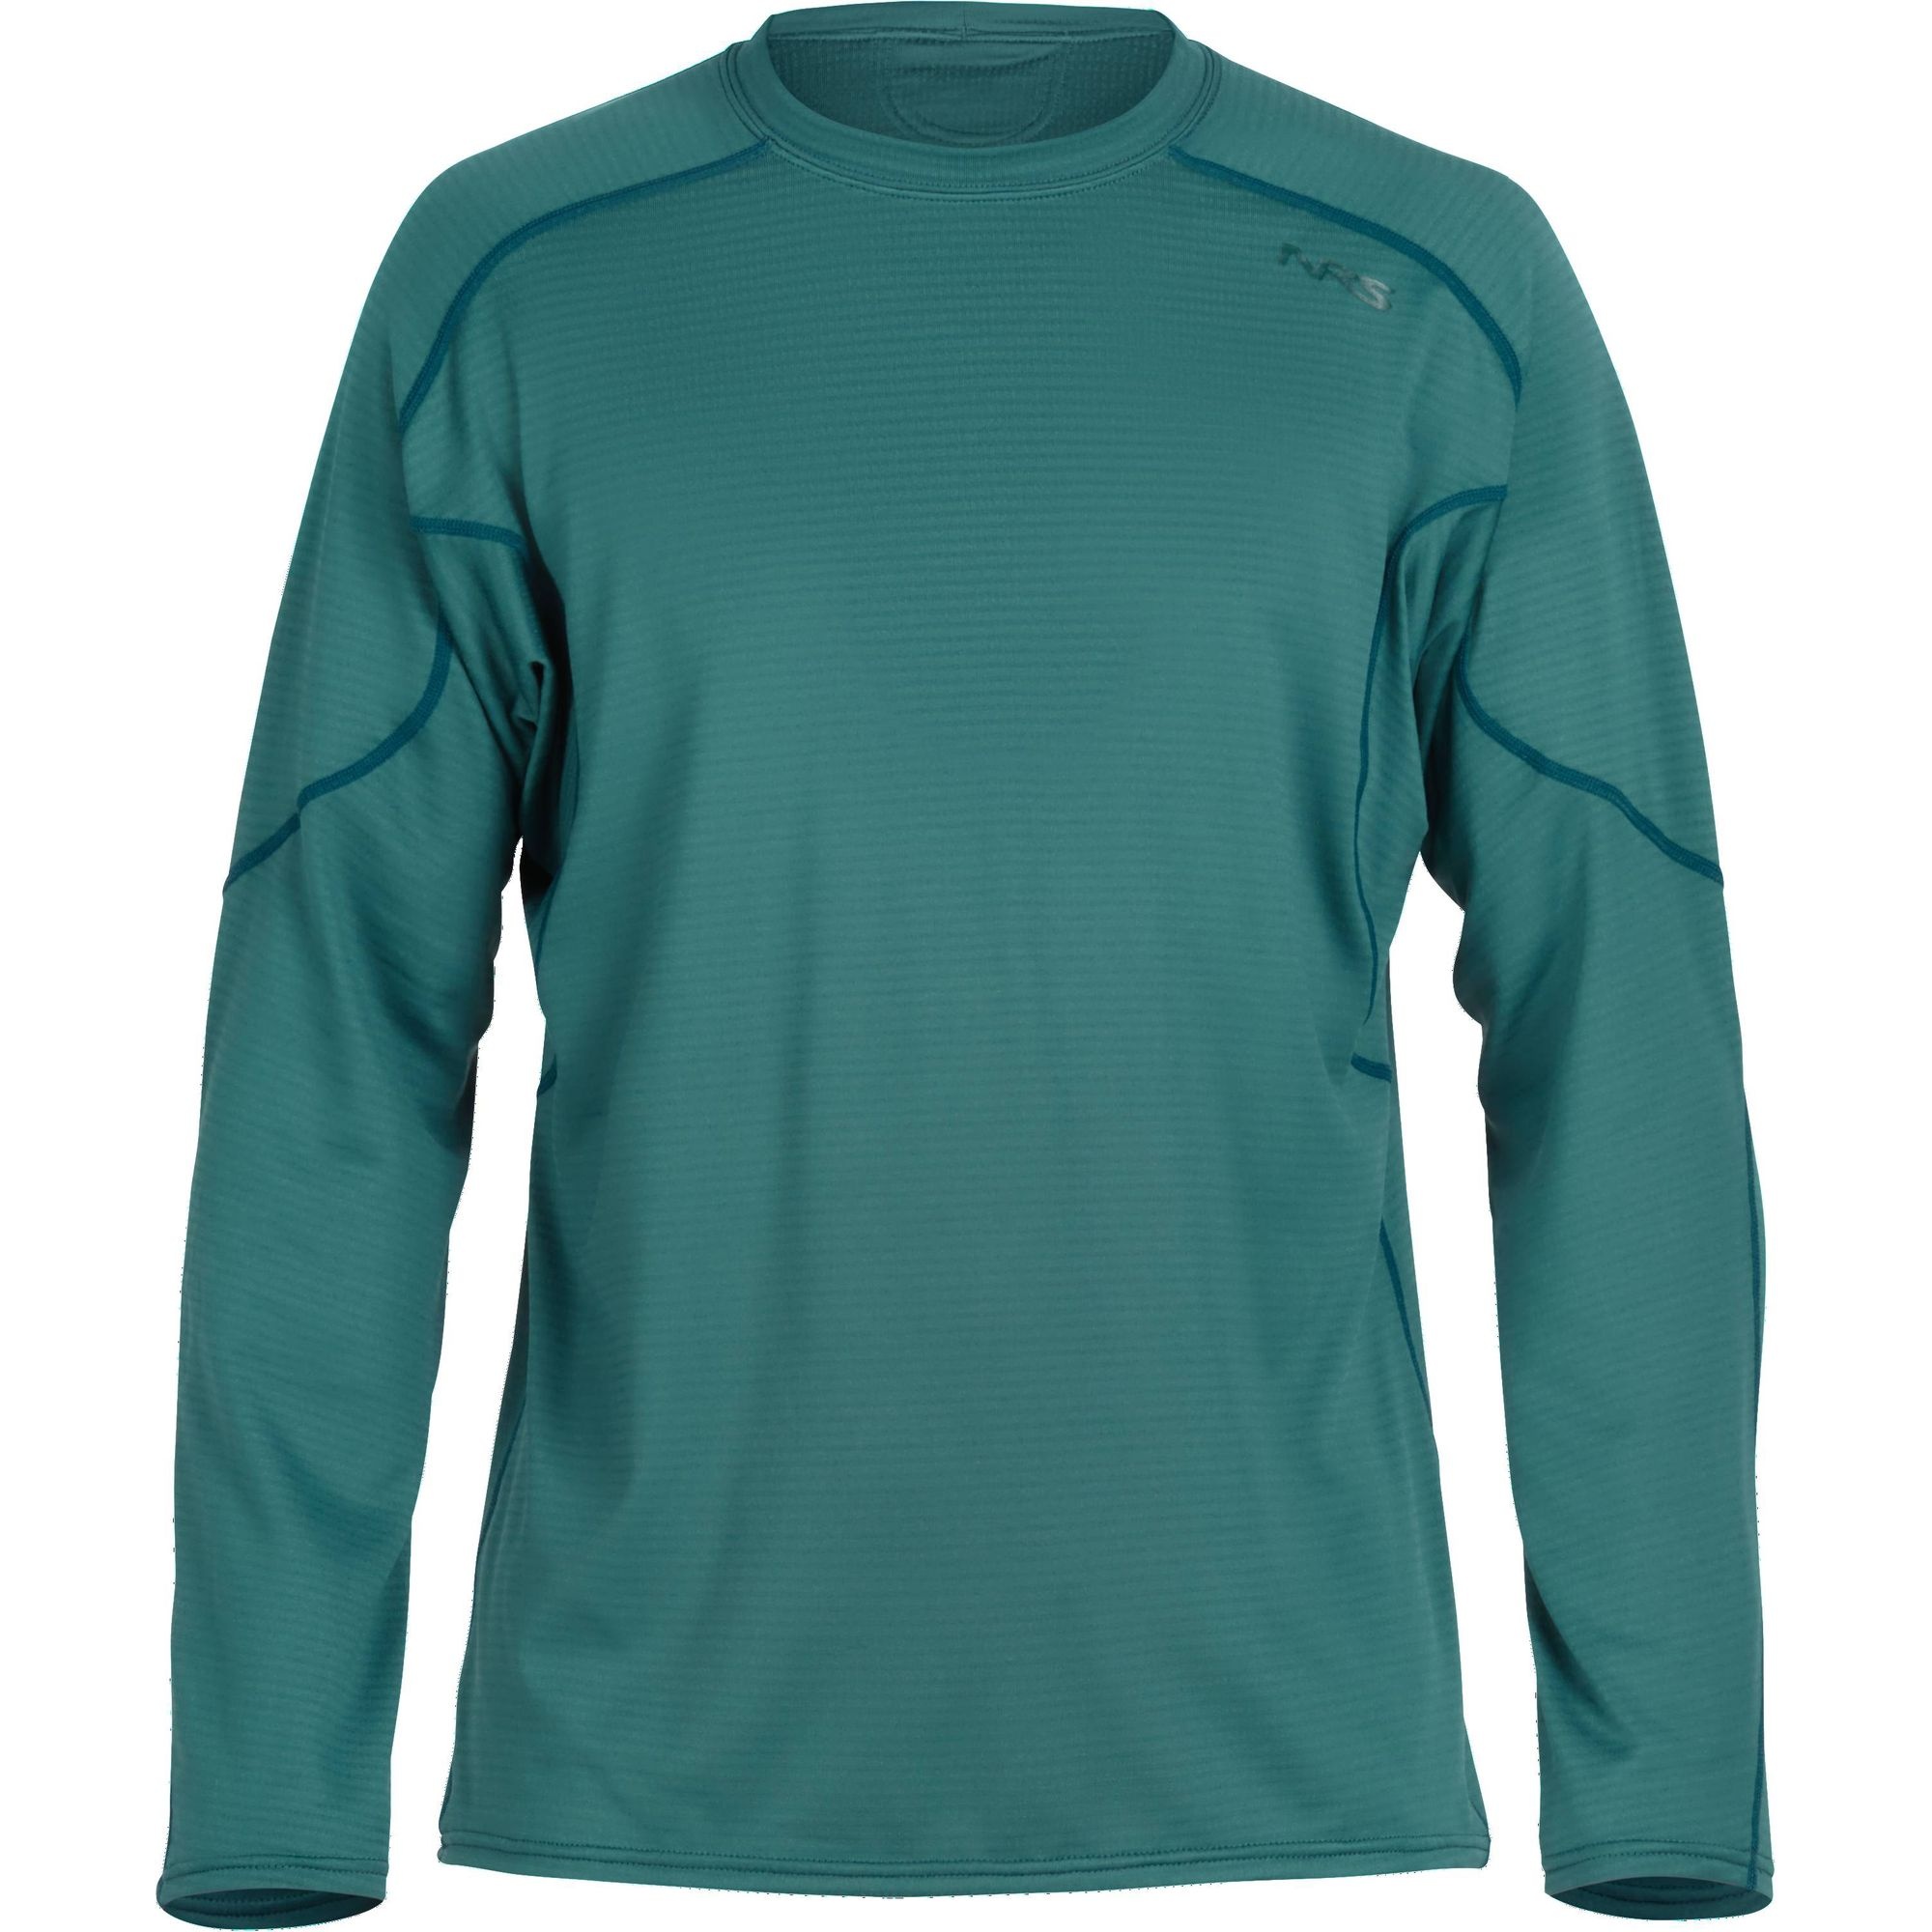 Clothing Layers for Paddling - SPF Shirts, Base Layer Shirts